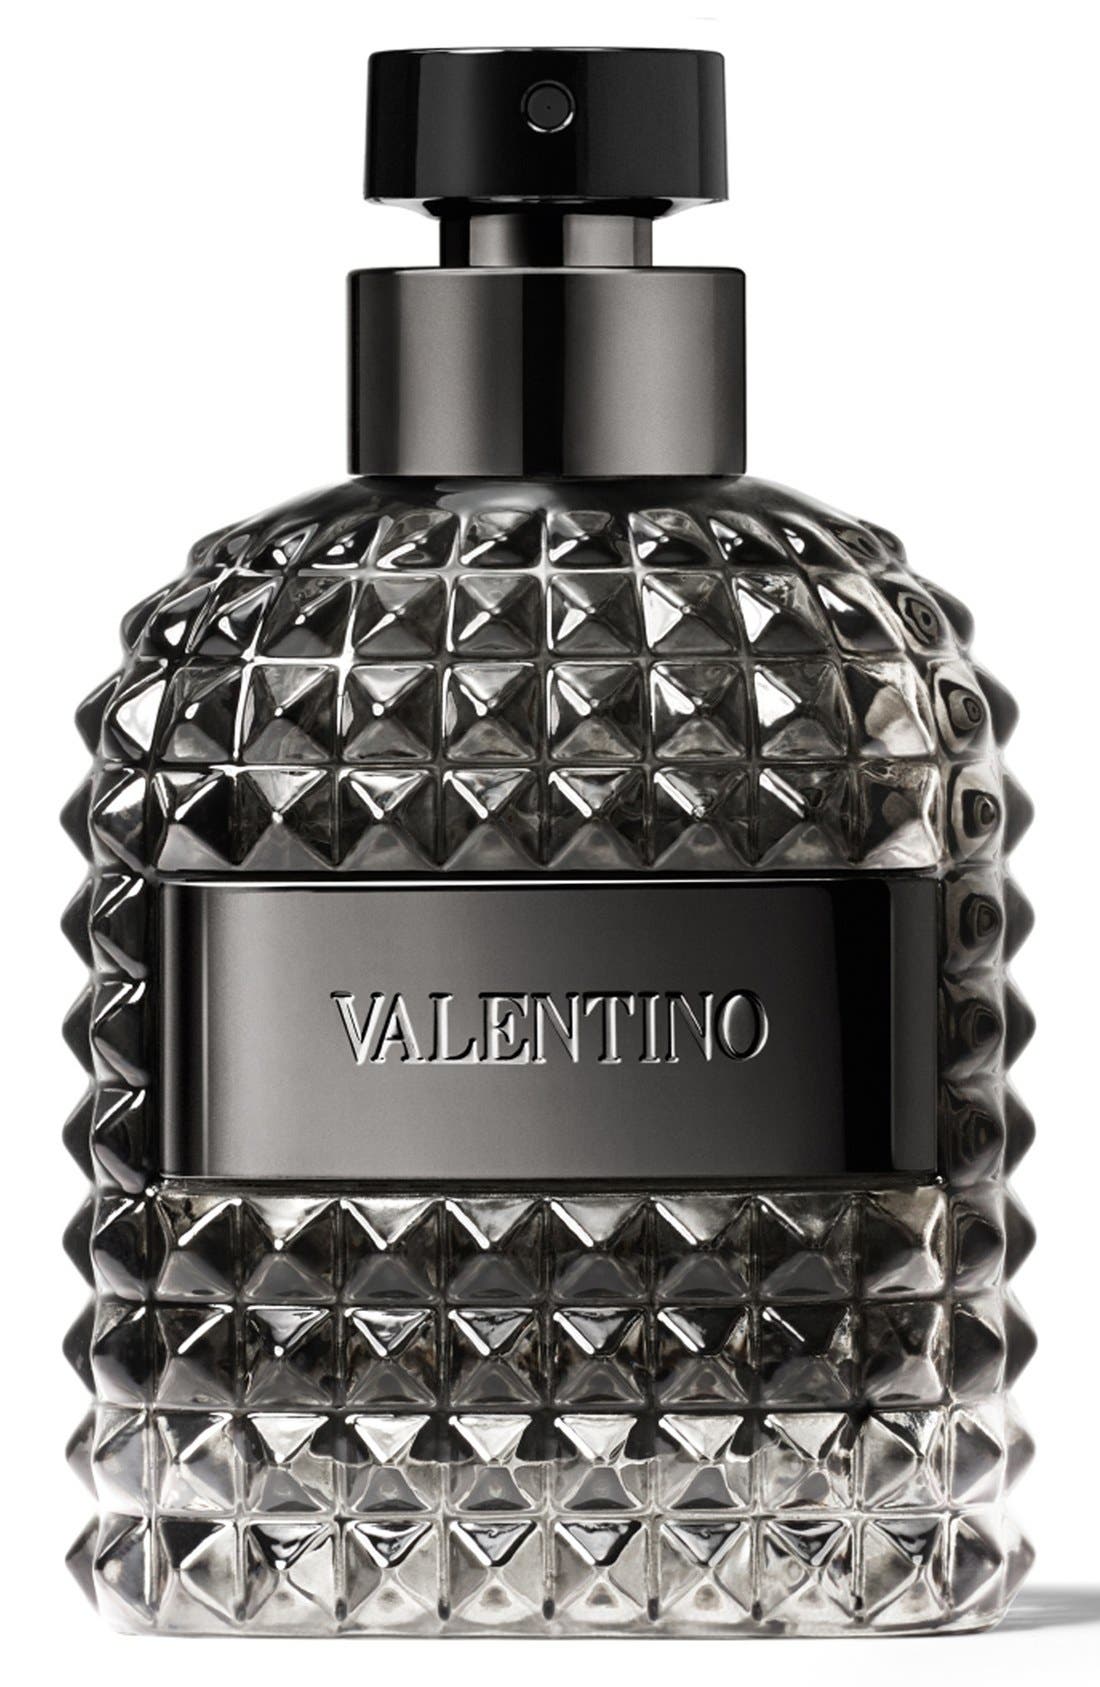 Valentino Uomo Intense Eau de Parfum at Nordstrom, Size 3.4 Oz